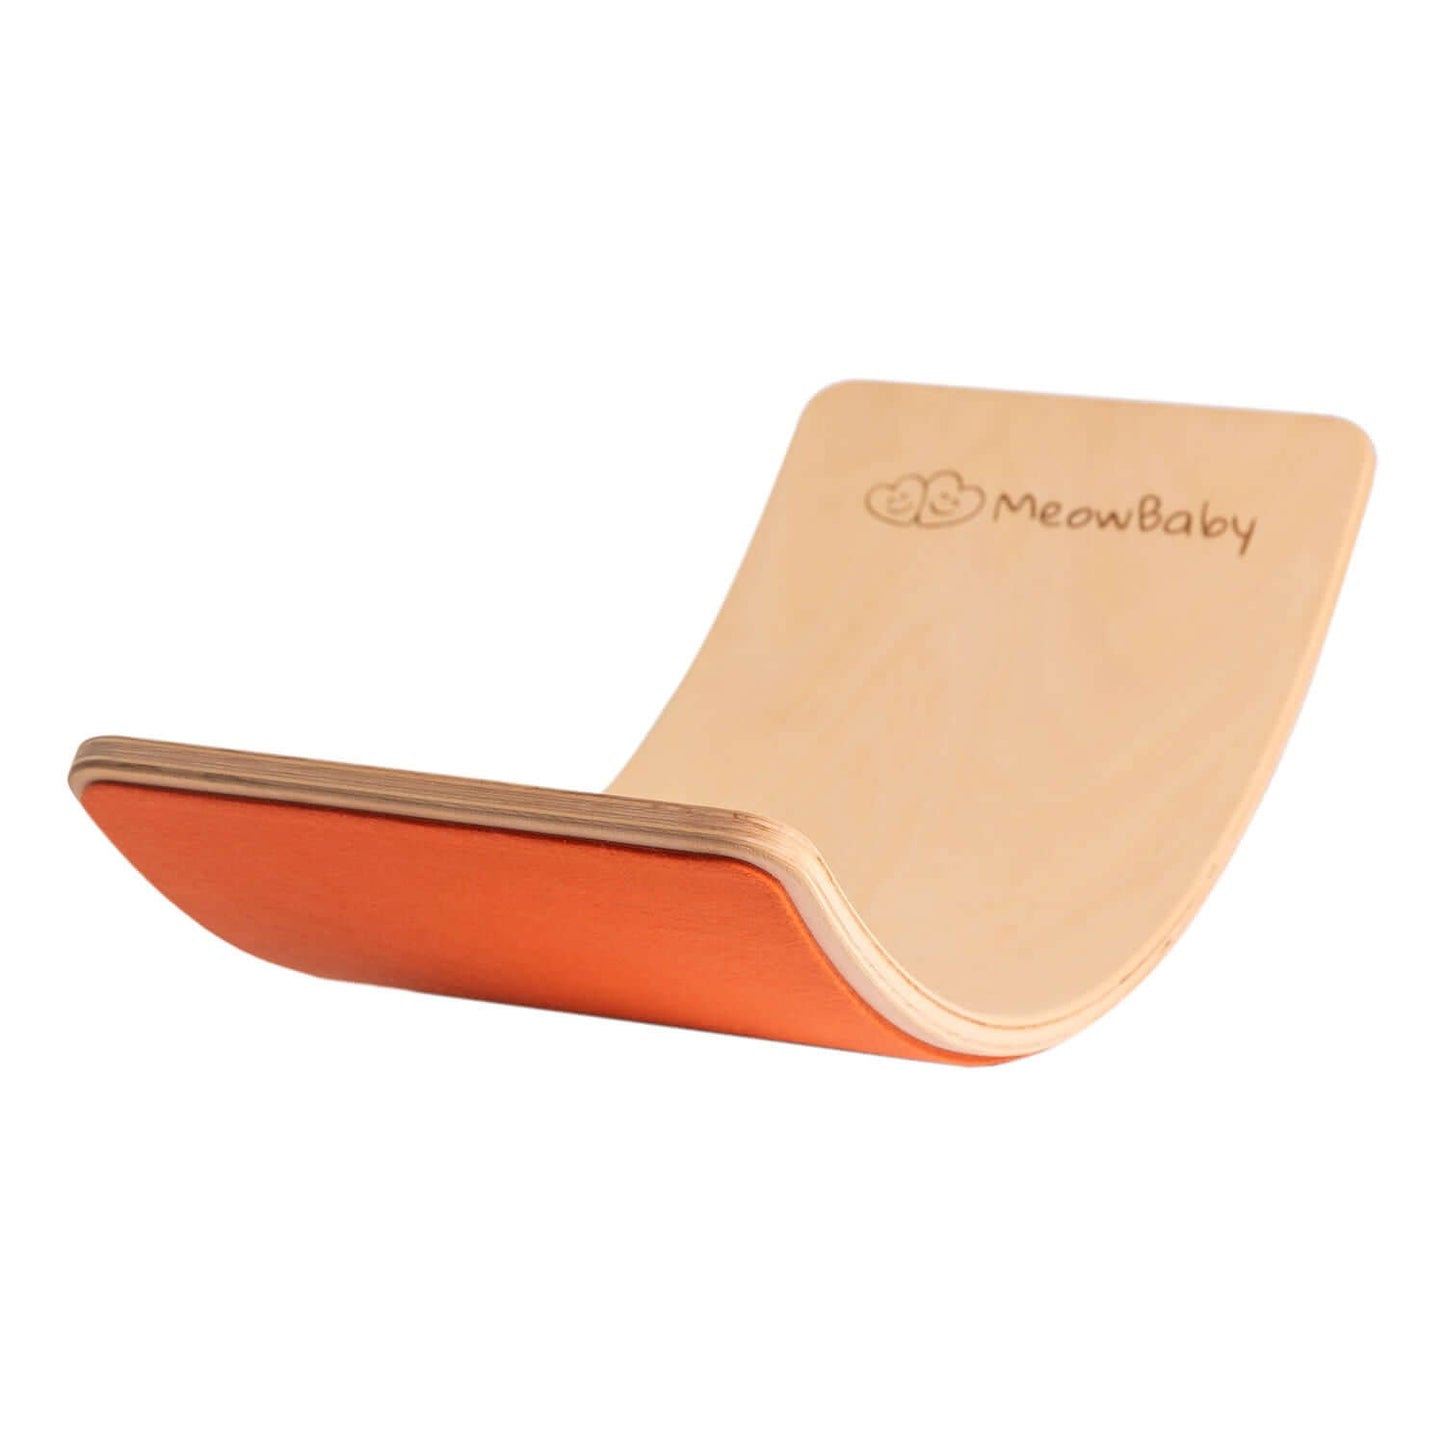 MeowBaby® Balance Board Houten balanceerplank met vilt